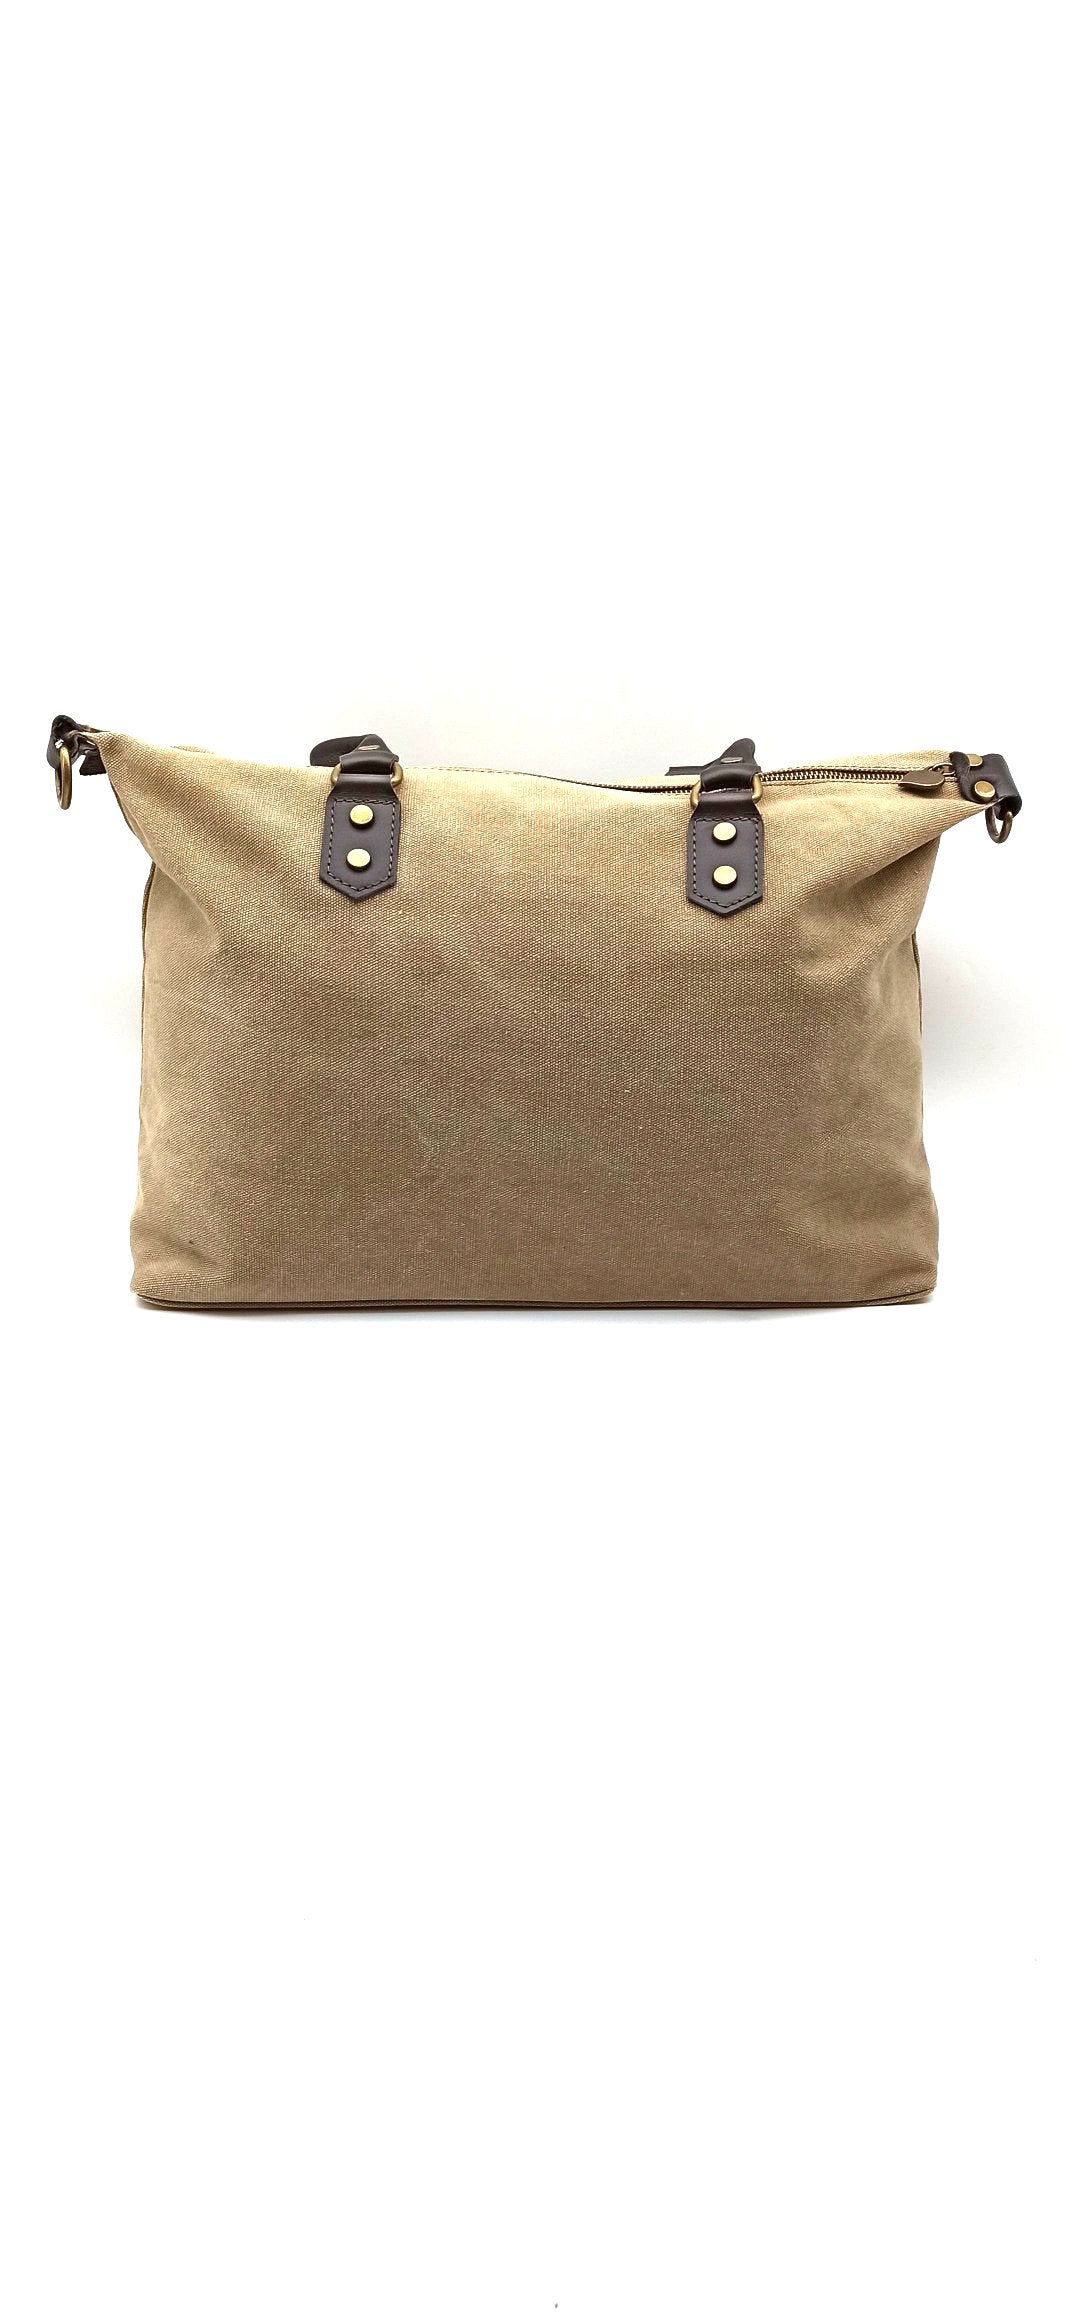 Baggy cotton and leather unisex Qoolst women's and men's shopper shoulder bag